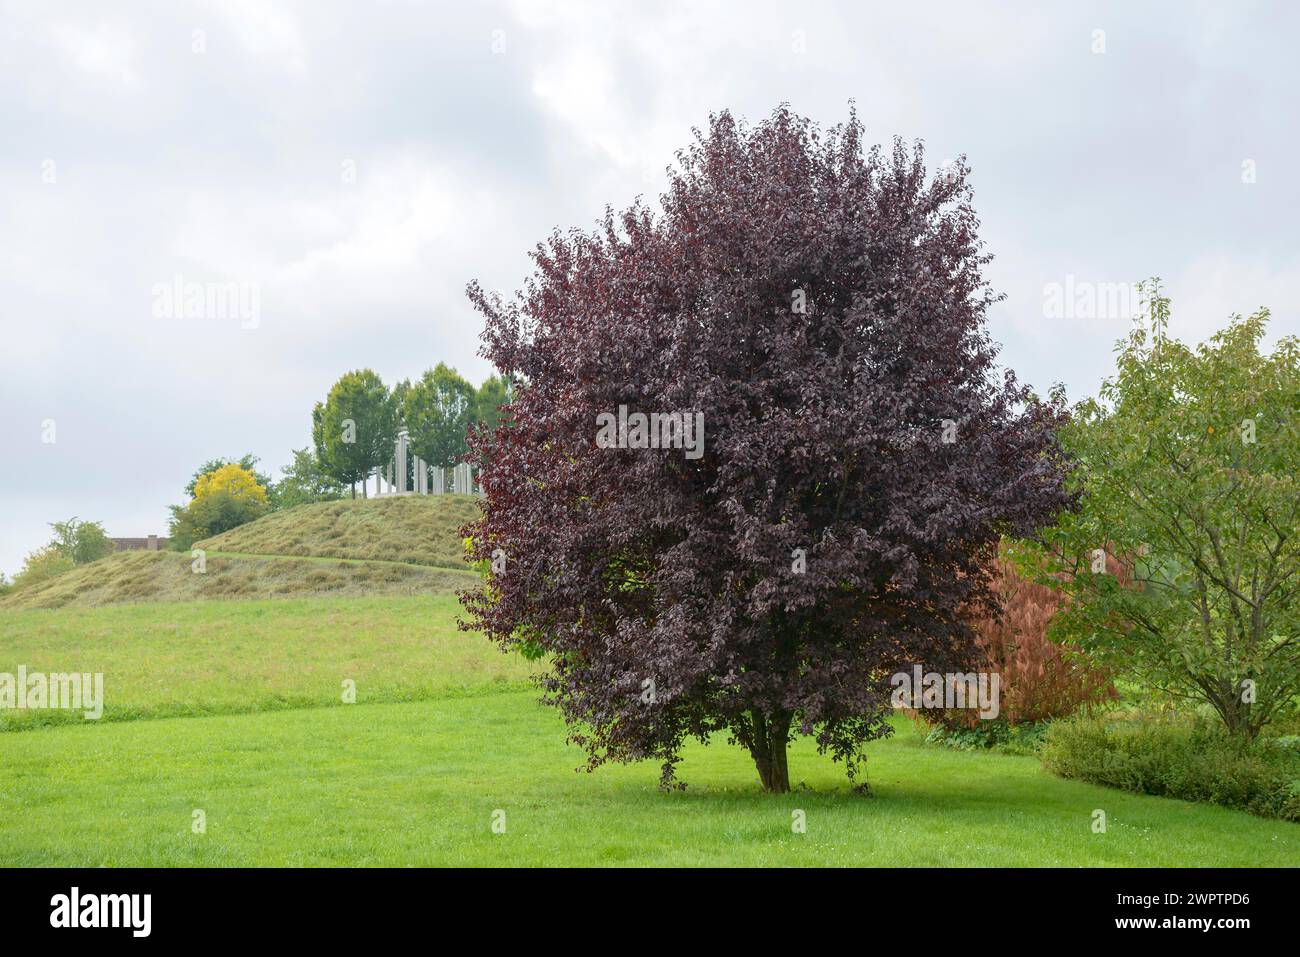 Prunus cerasifera 'Nigra', jardins de Hohenheim, Stuttgart, Bade-Wuerttemberg, Allemagne Banque D'Images